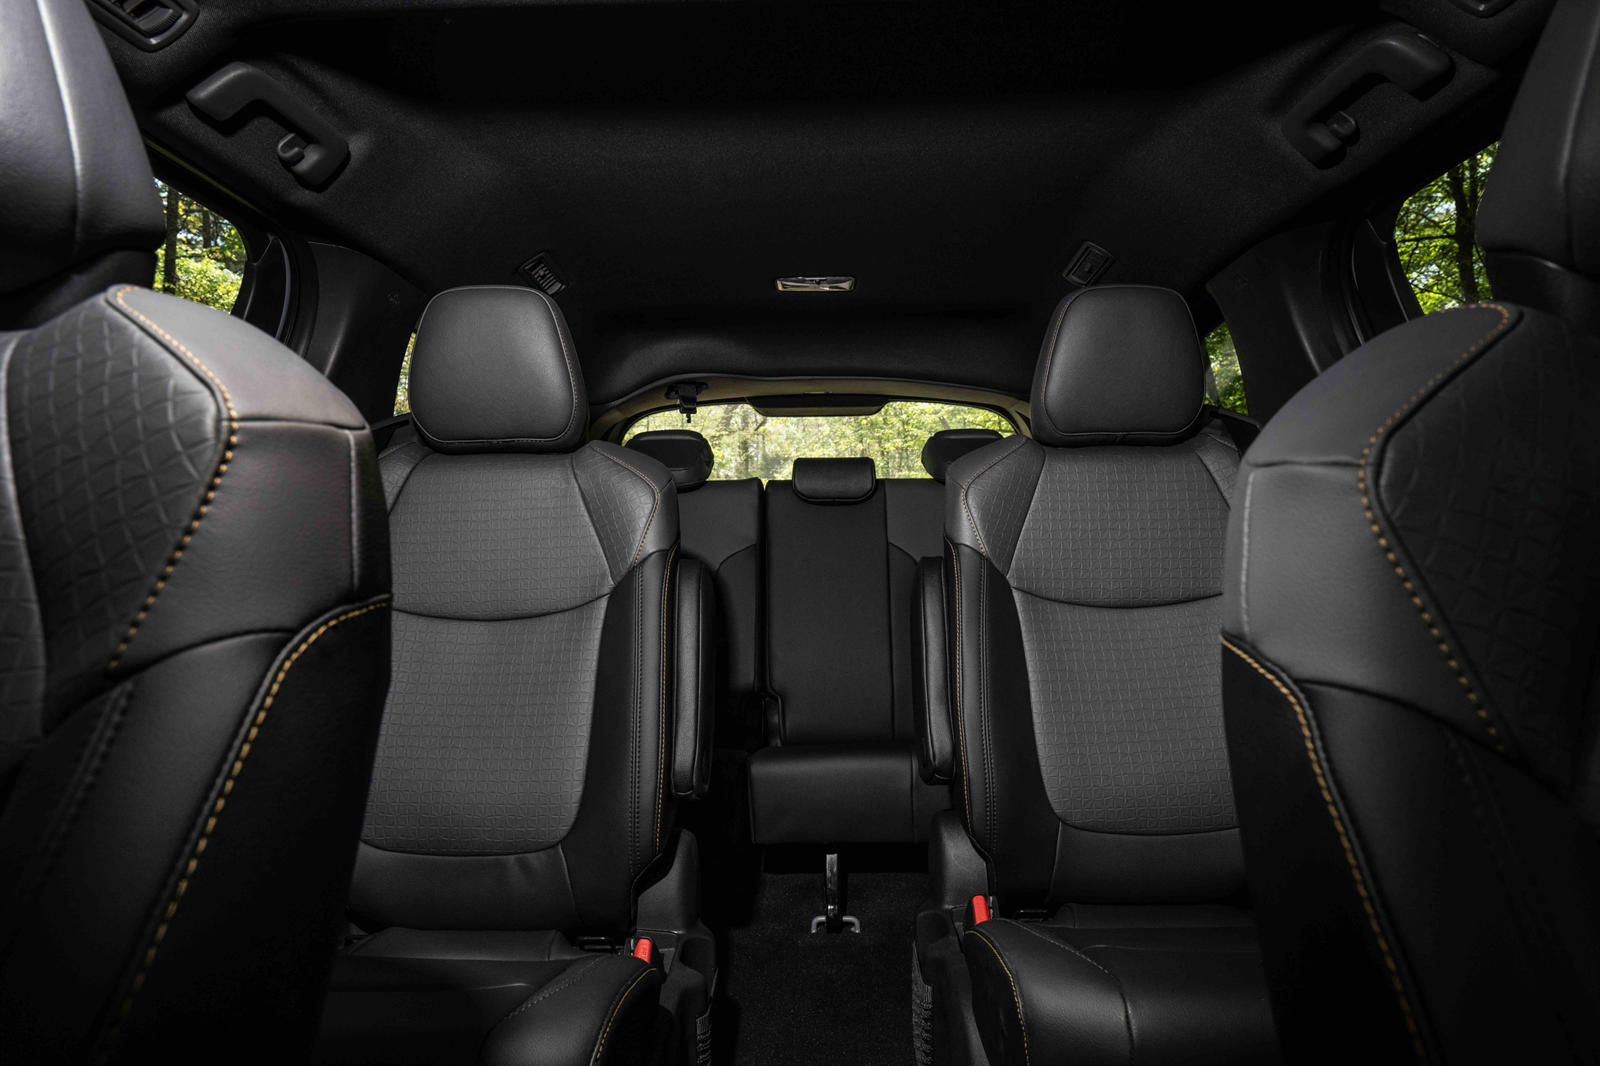 Toyota Sienna interior - Seats